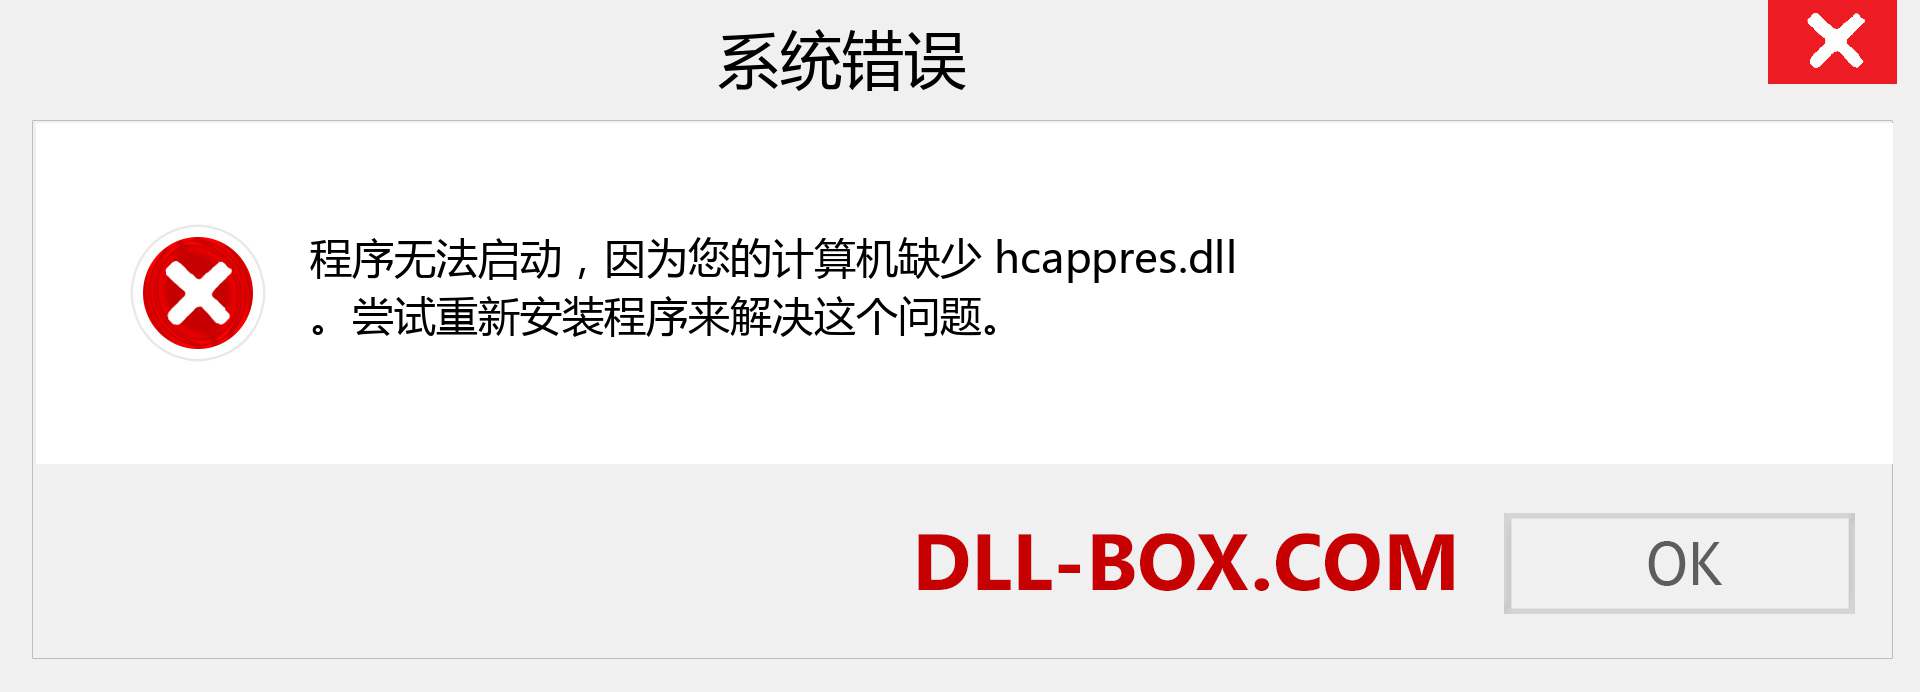 hcappres.dll 文件丢失？。 适用于 Windows 7、8、10 的下载 - 修复 Windows、照片、图像上的 hcappres dll 丢失错误